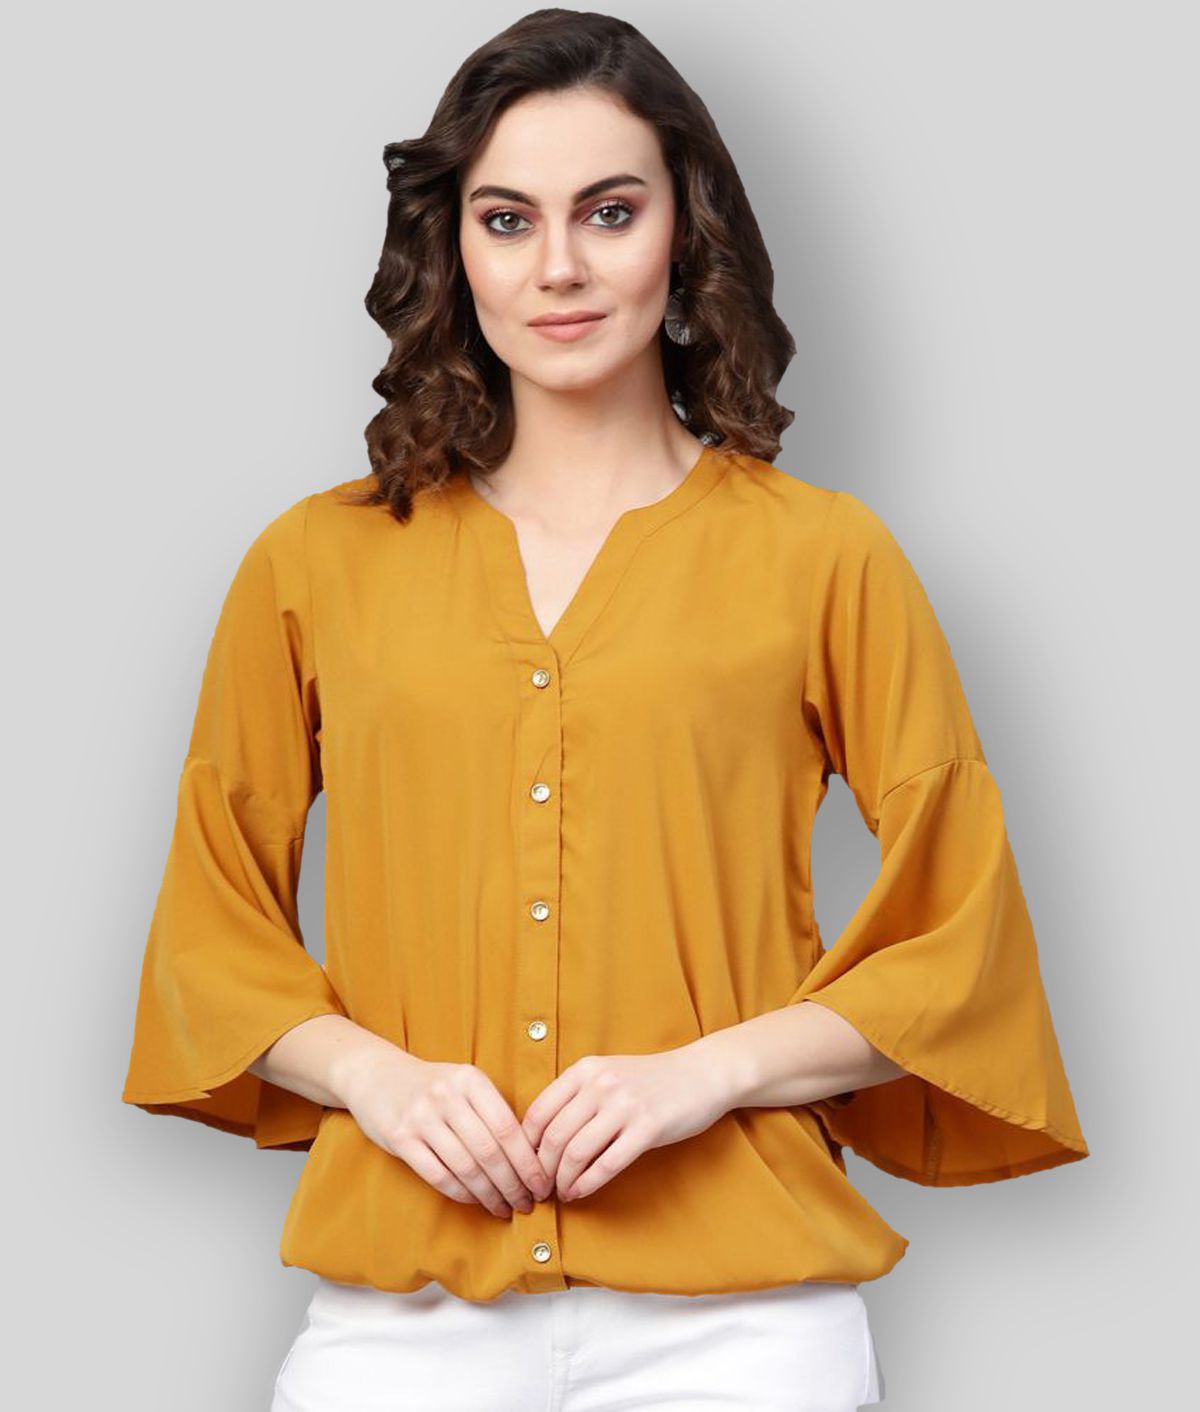     			Pannkh - Yellow Polyester Women's Regular Top ( Pack of 1 )